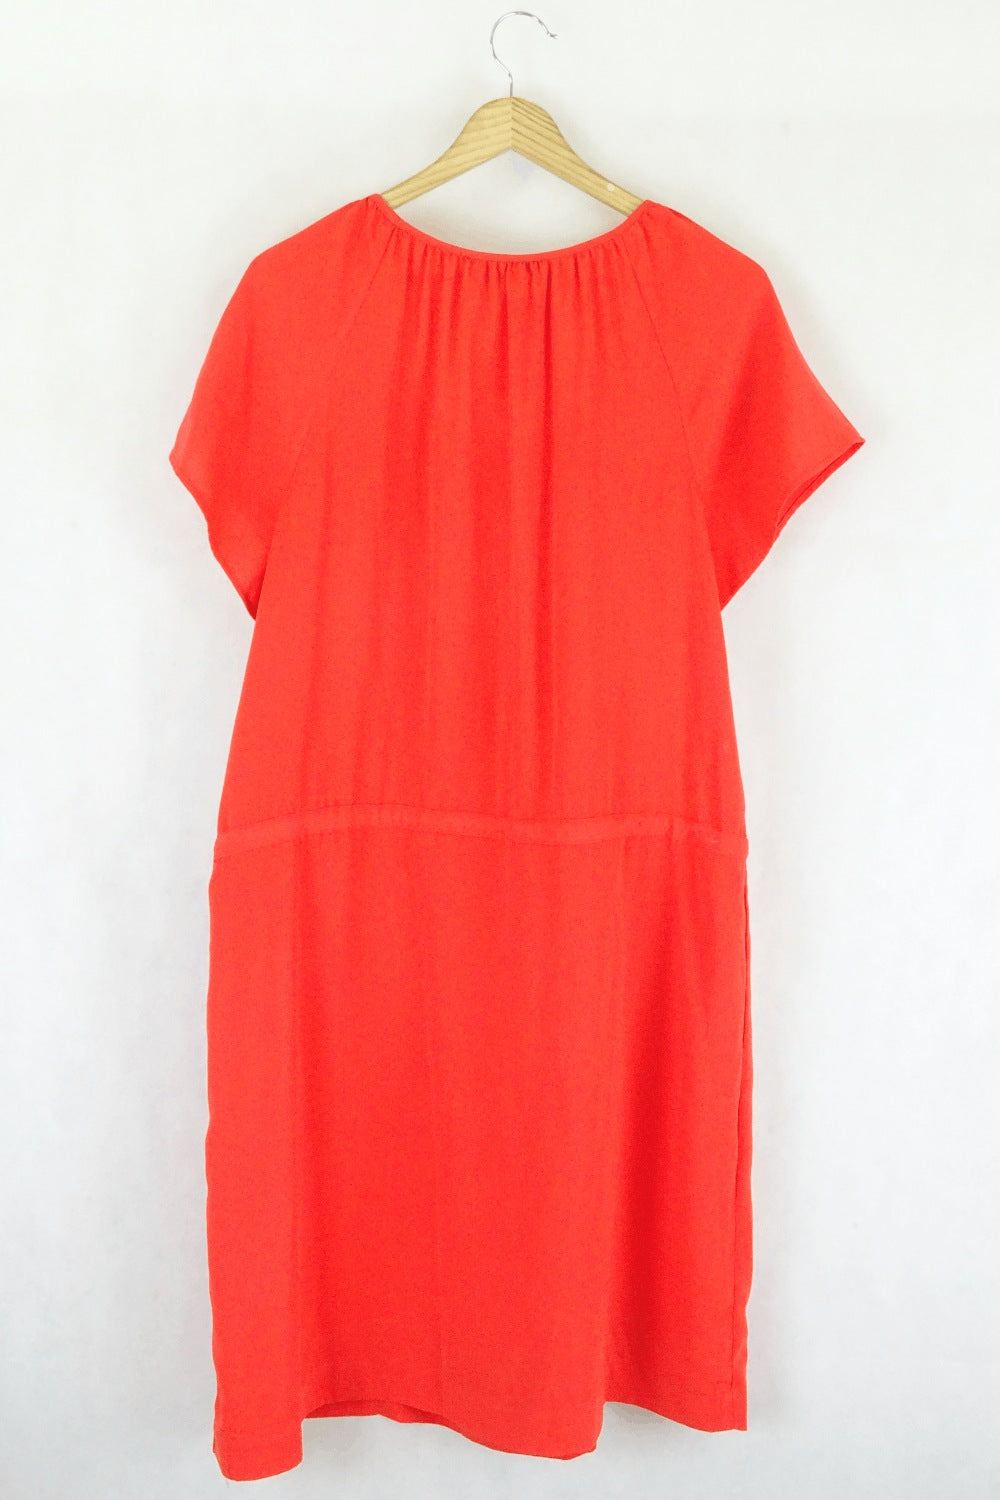 Jacquie E  orange dress 16